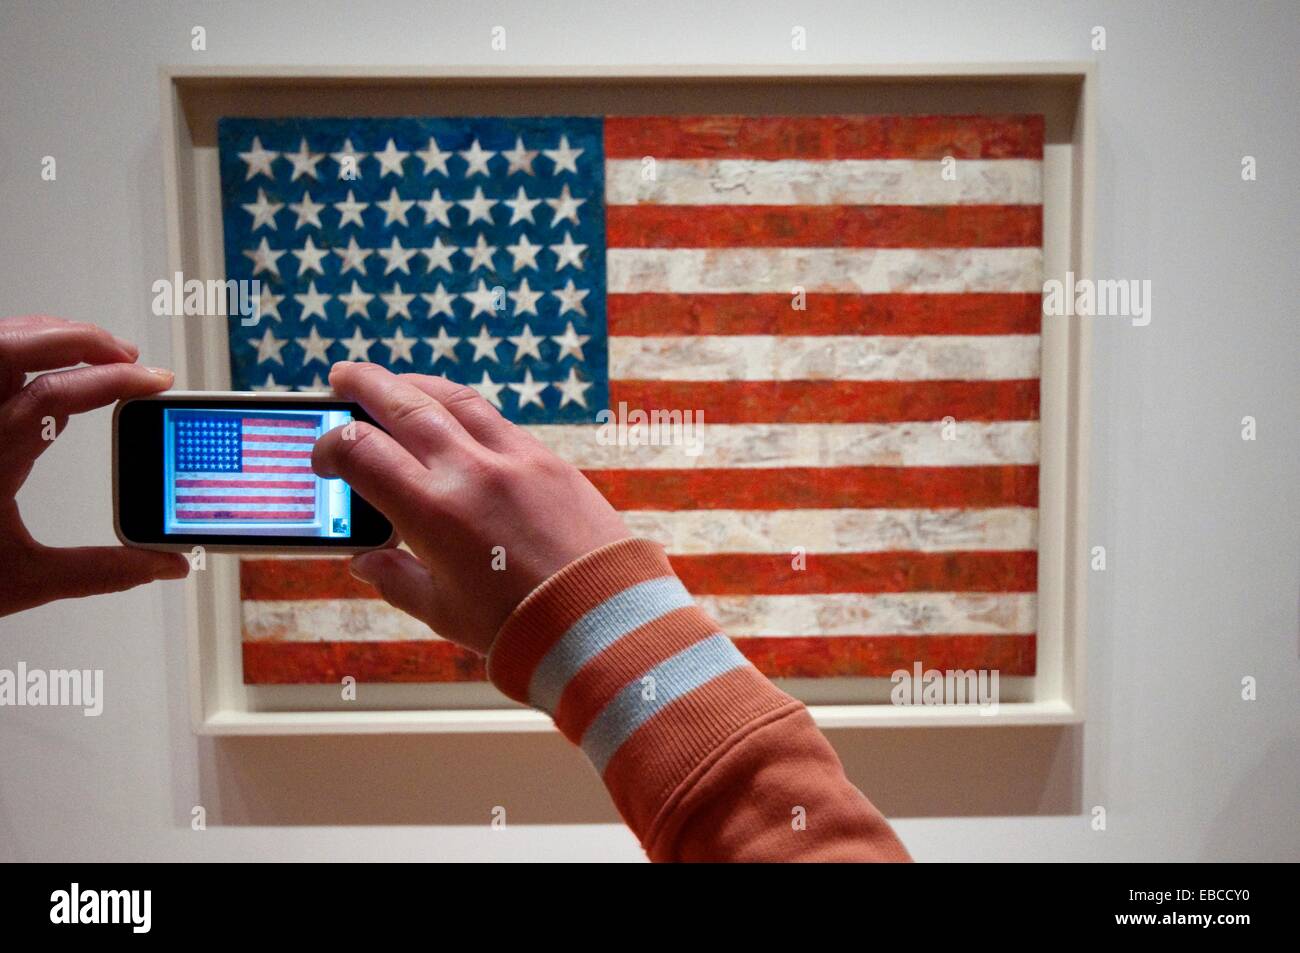 New York, New York City, Manhattan, Museum of Modern Art, Woman Taking Picture Using an iPhone, Flag By Jasper Johns Stock Photo - Alamy